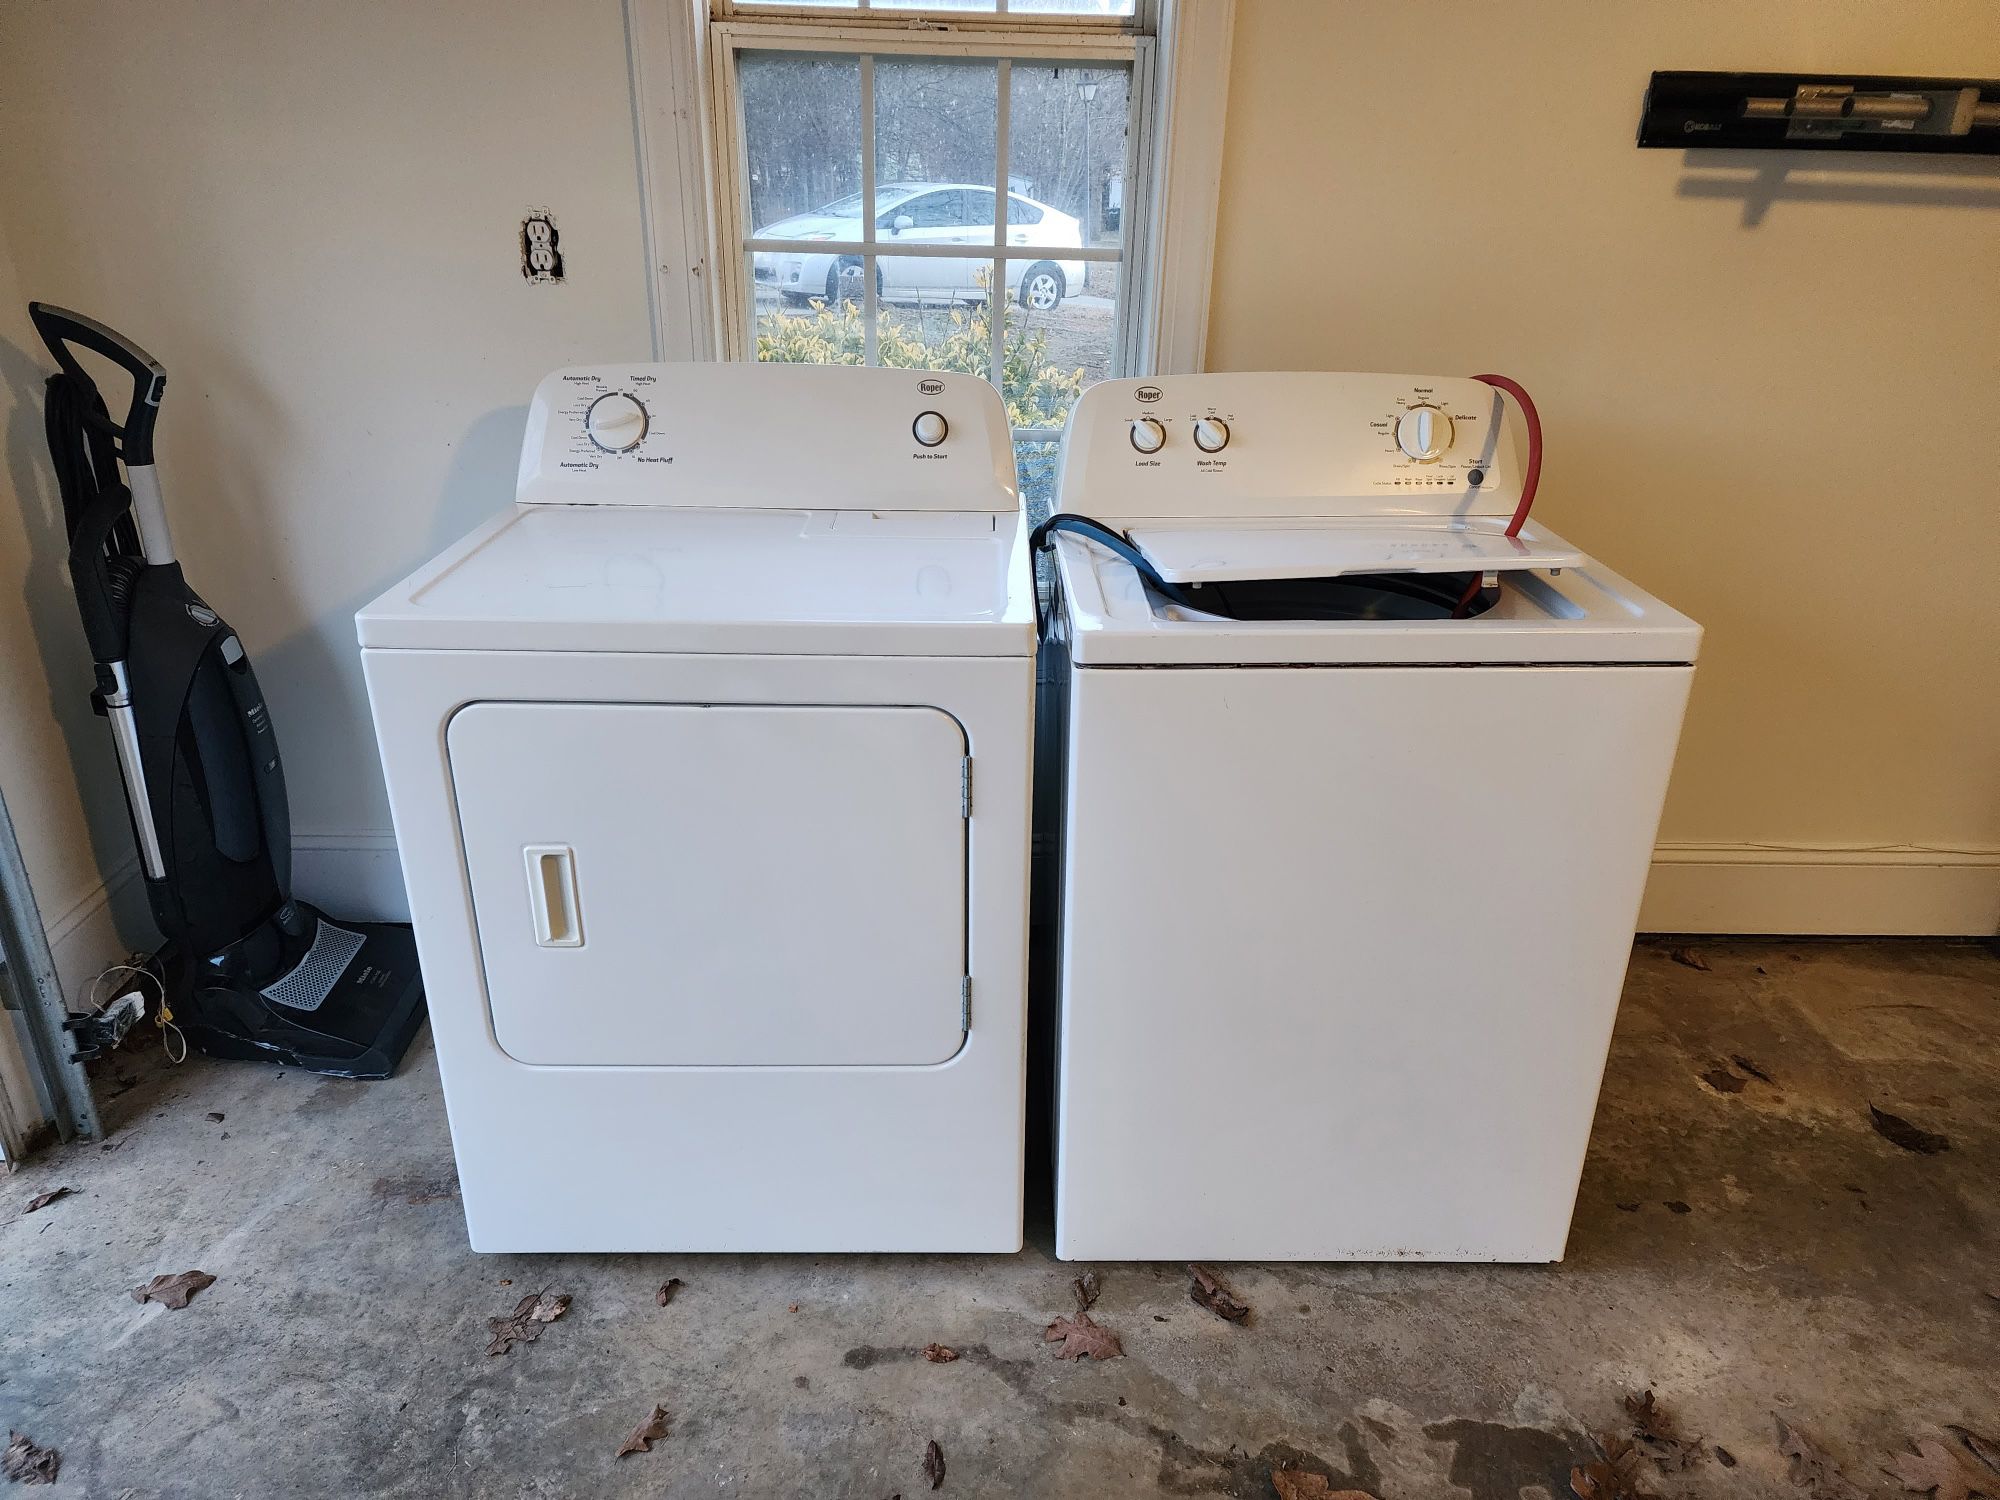 Roper Washer Dryer Set